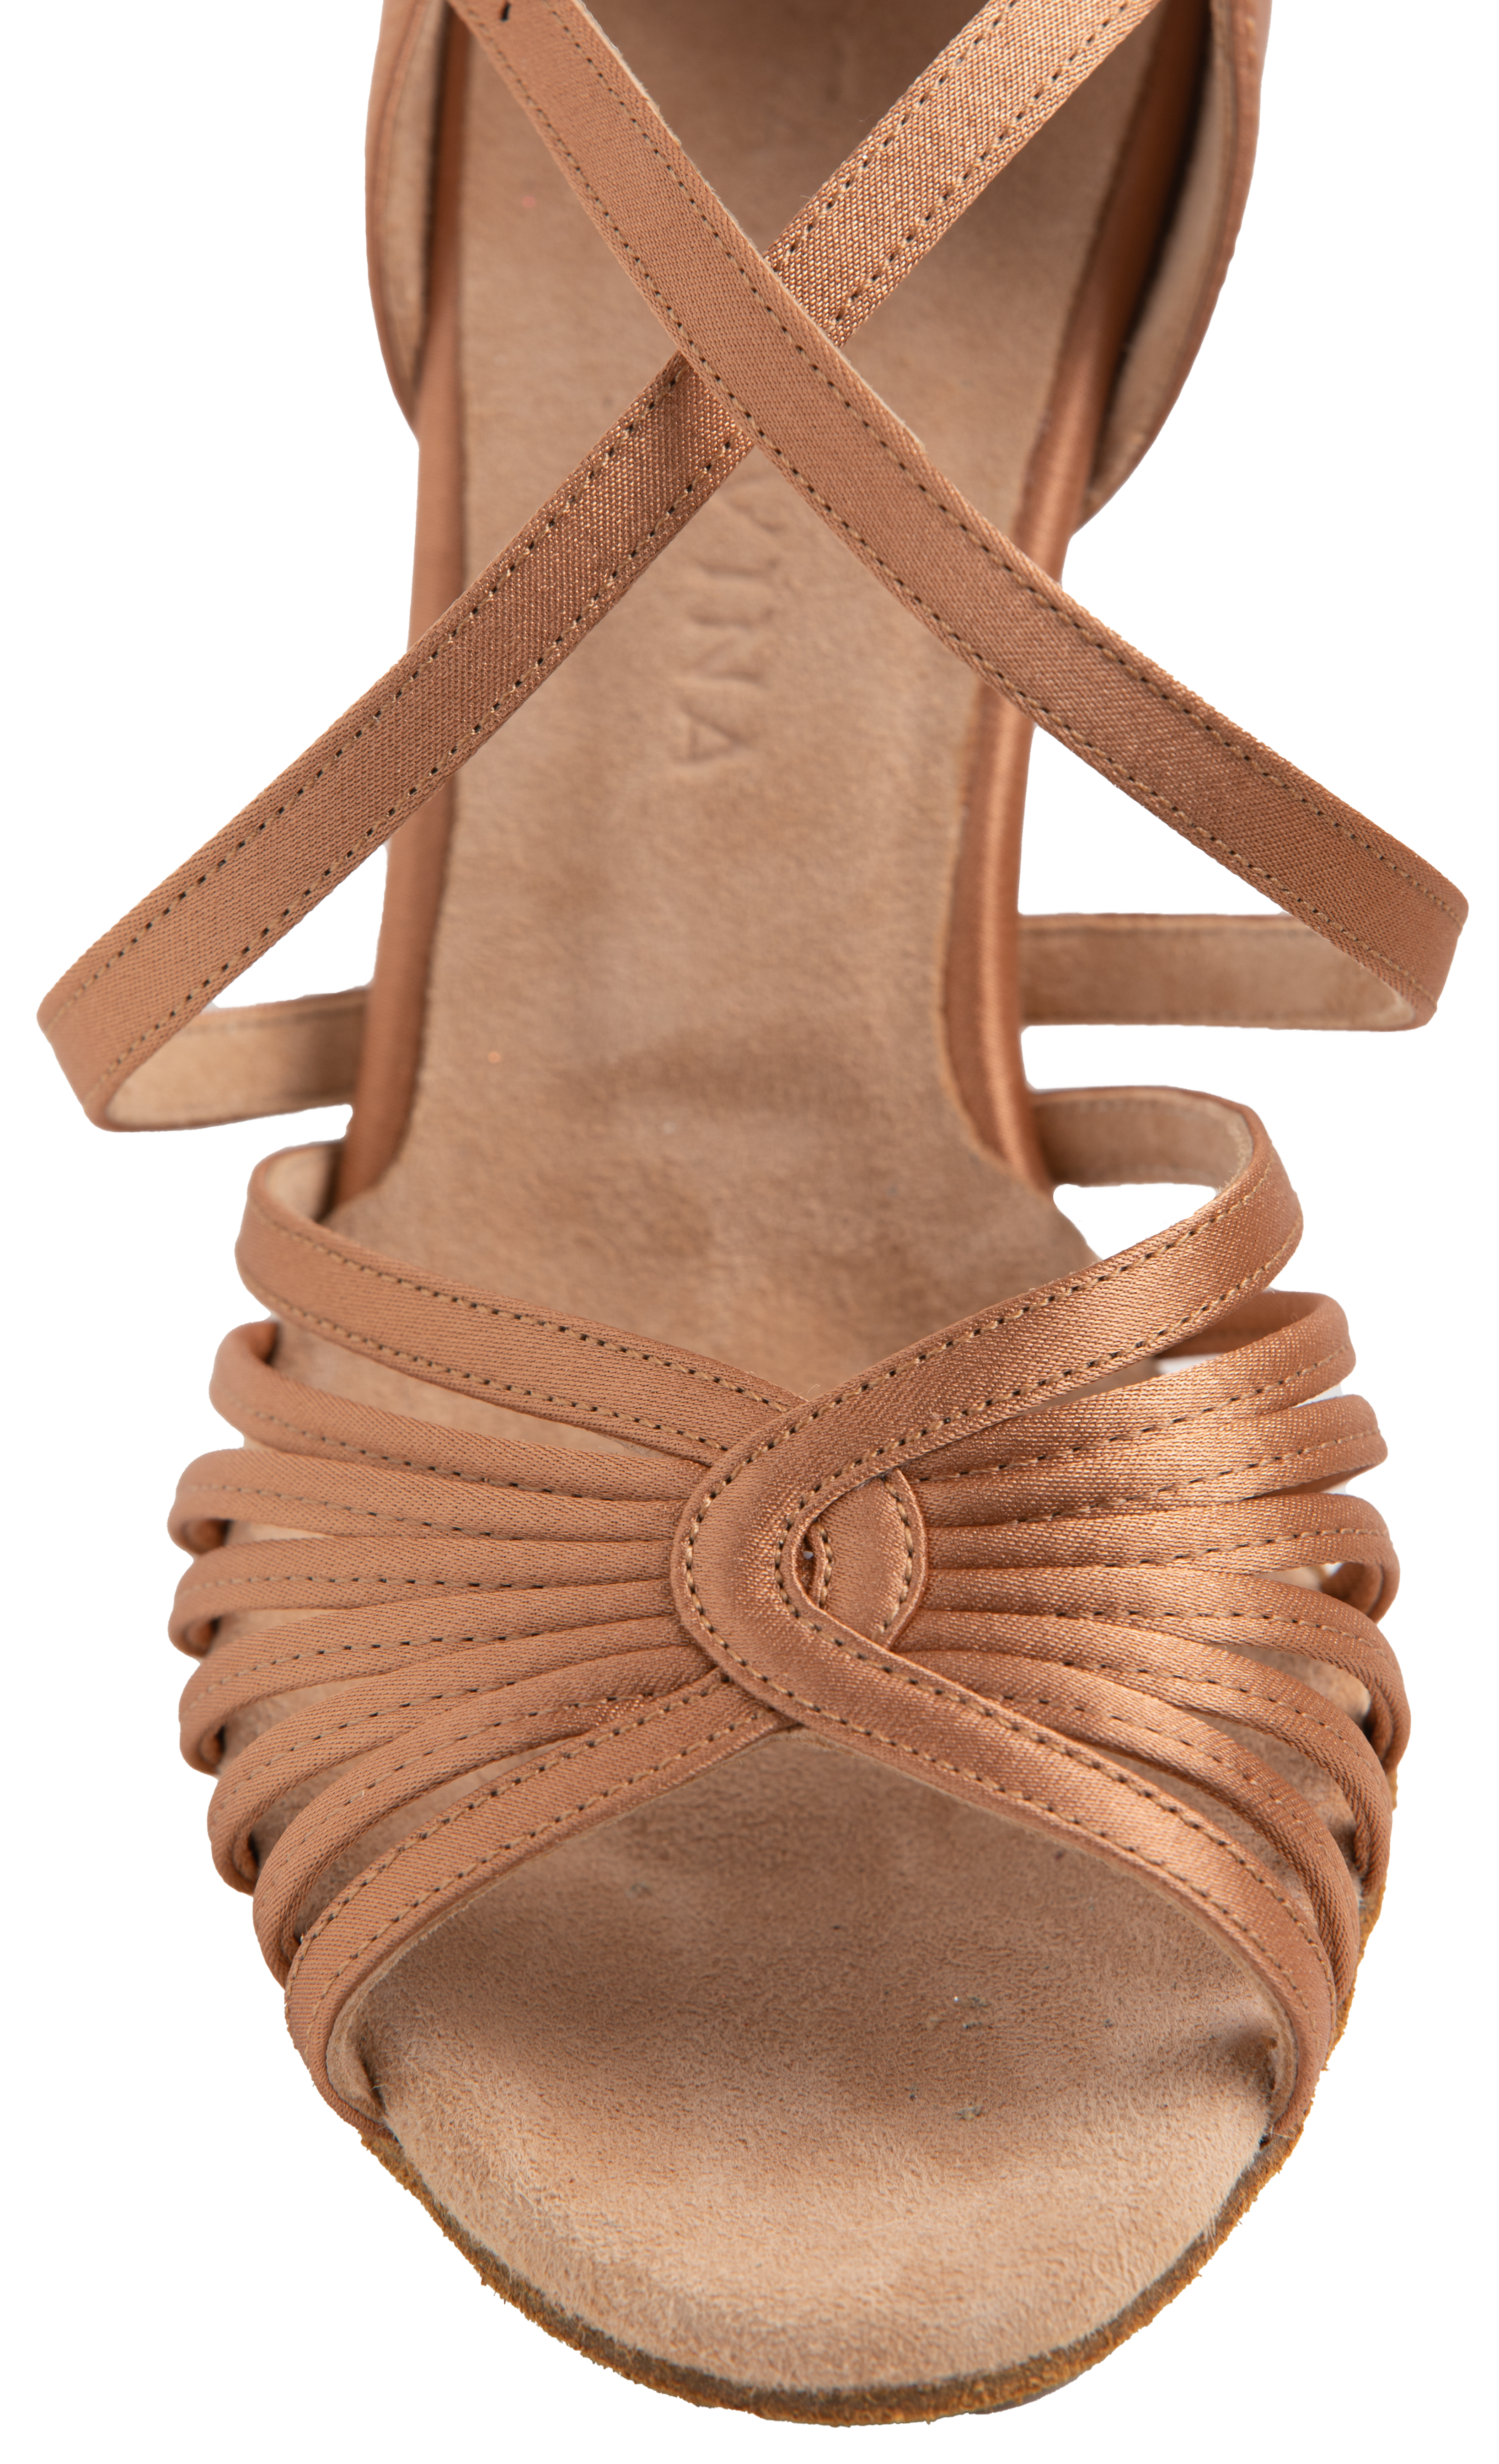 Latin dance shoes (ENERGY SATIN) with nude, satin straps & 'ANITA FLAVINA' insoles